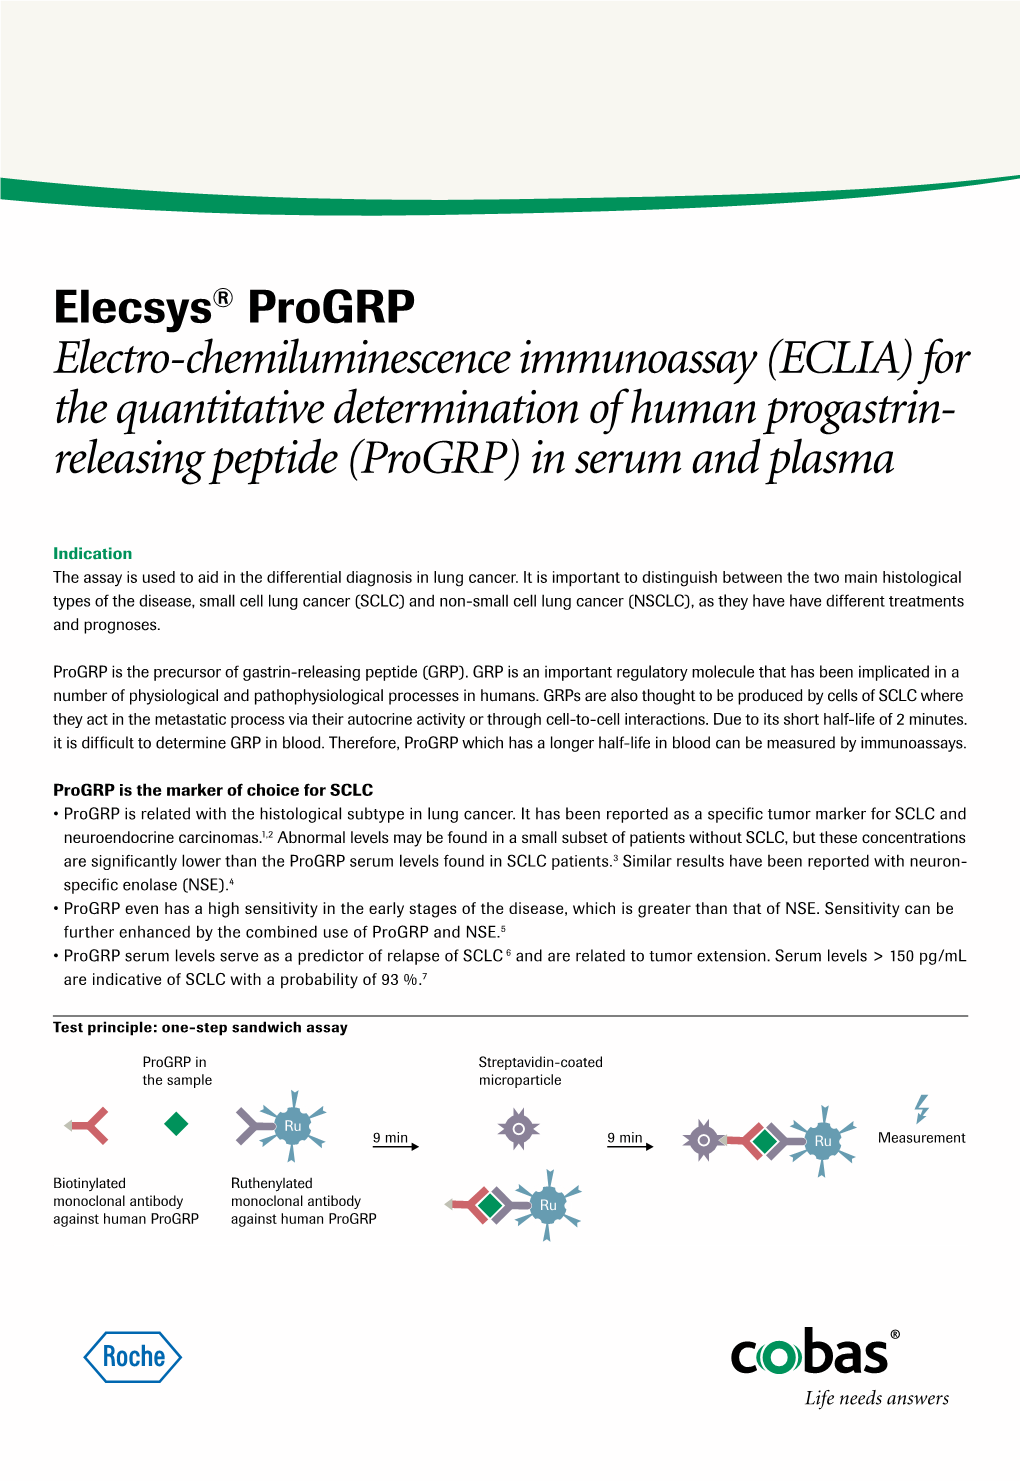 Electro-Chemiluminescence Immunoassay (ECLIA) for the Quantitative Determination of Human Progastrin- Releasing Peptide (Progrp)